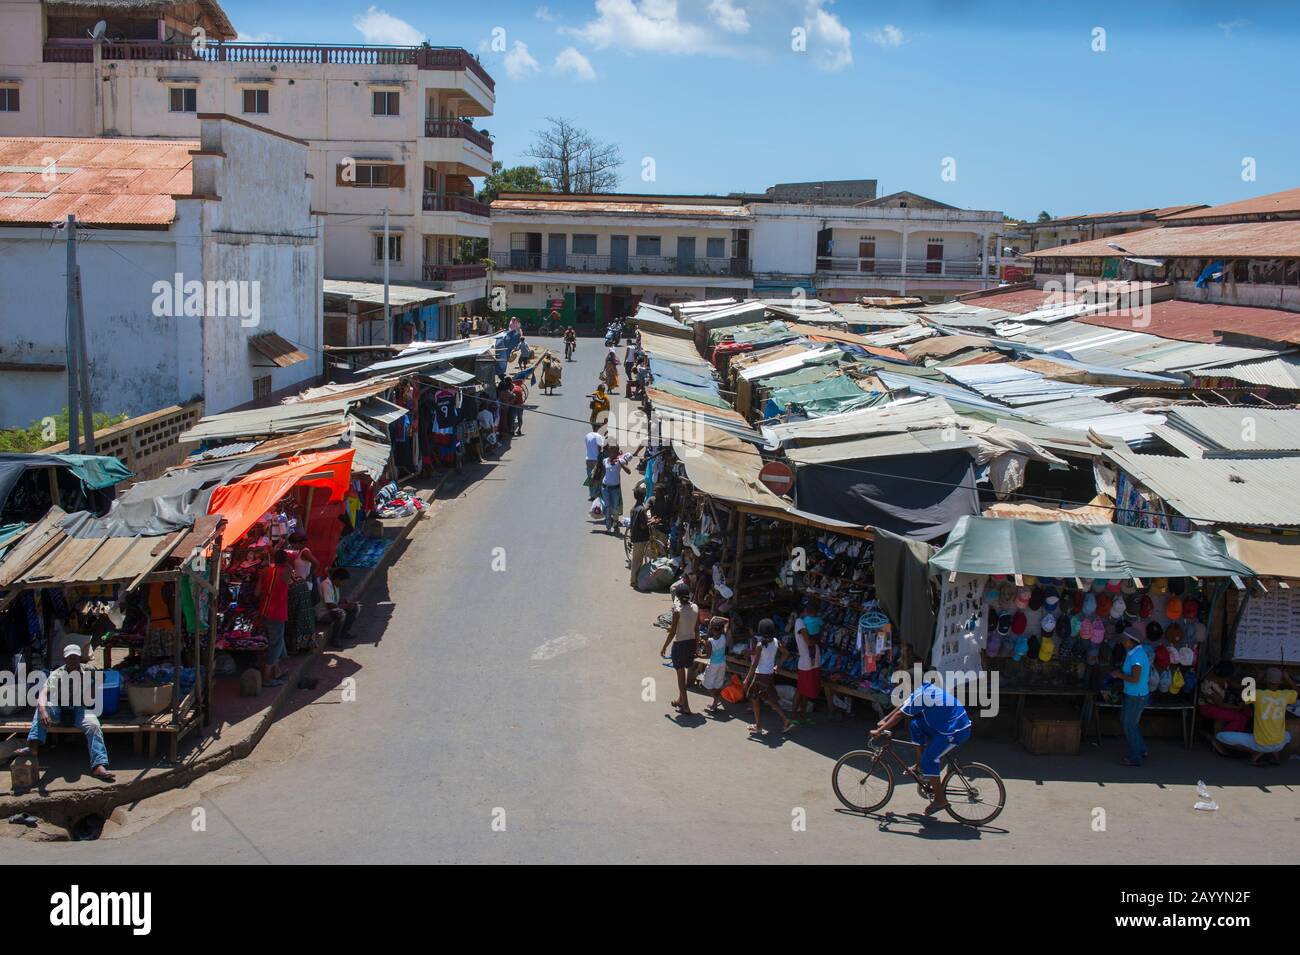 View of a market in Antsiranana (Diego Suarez), Madagascar. Stock Photo